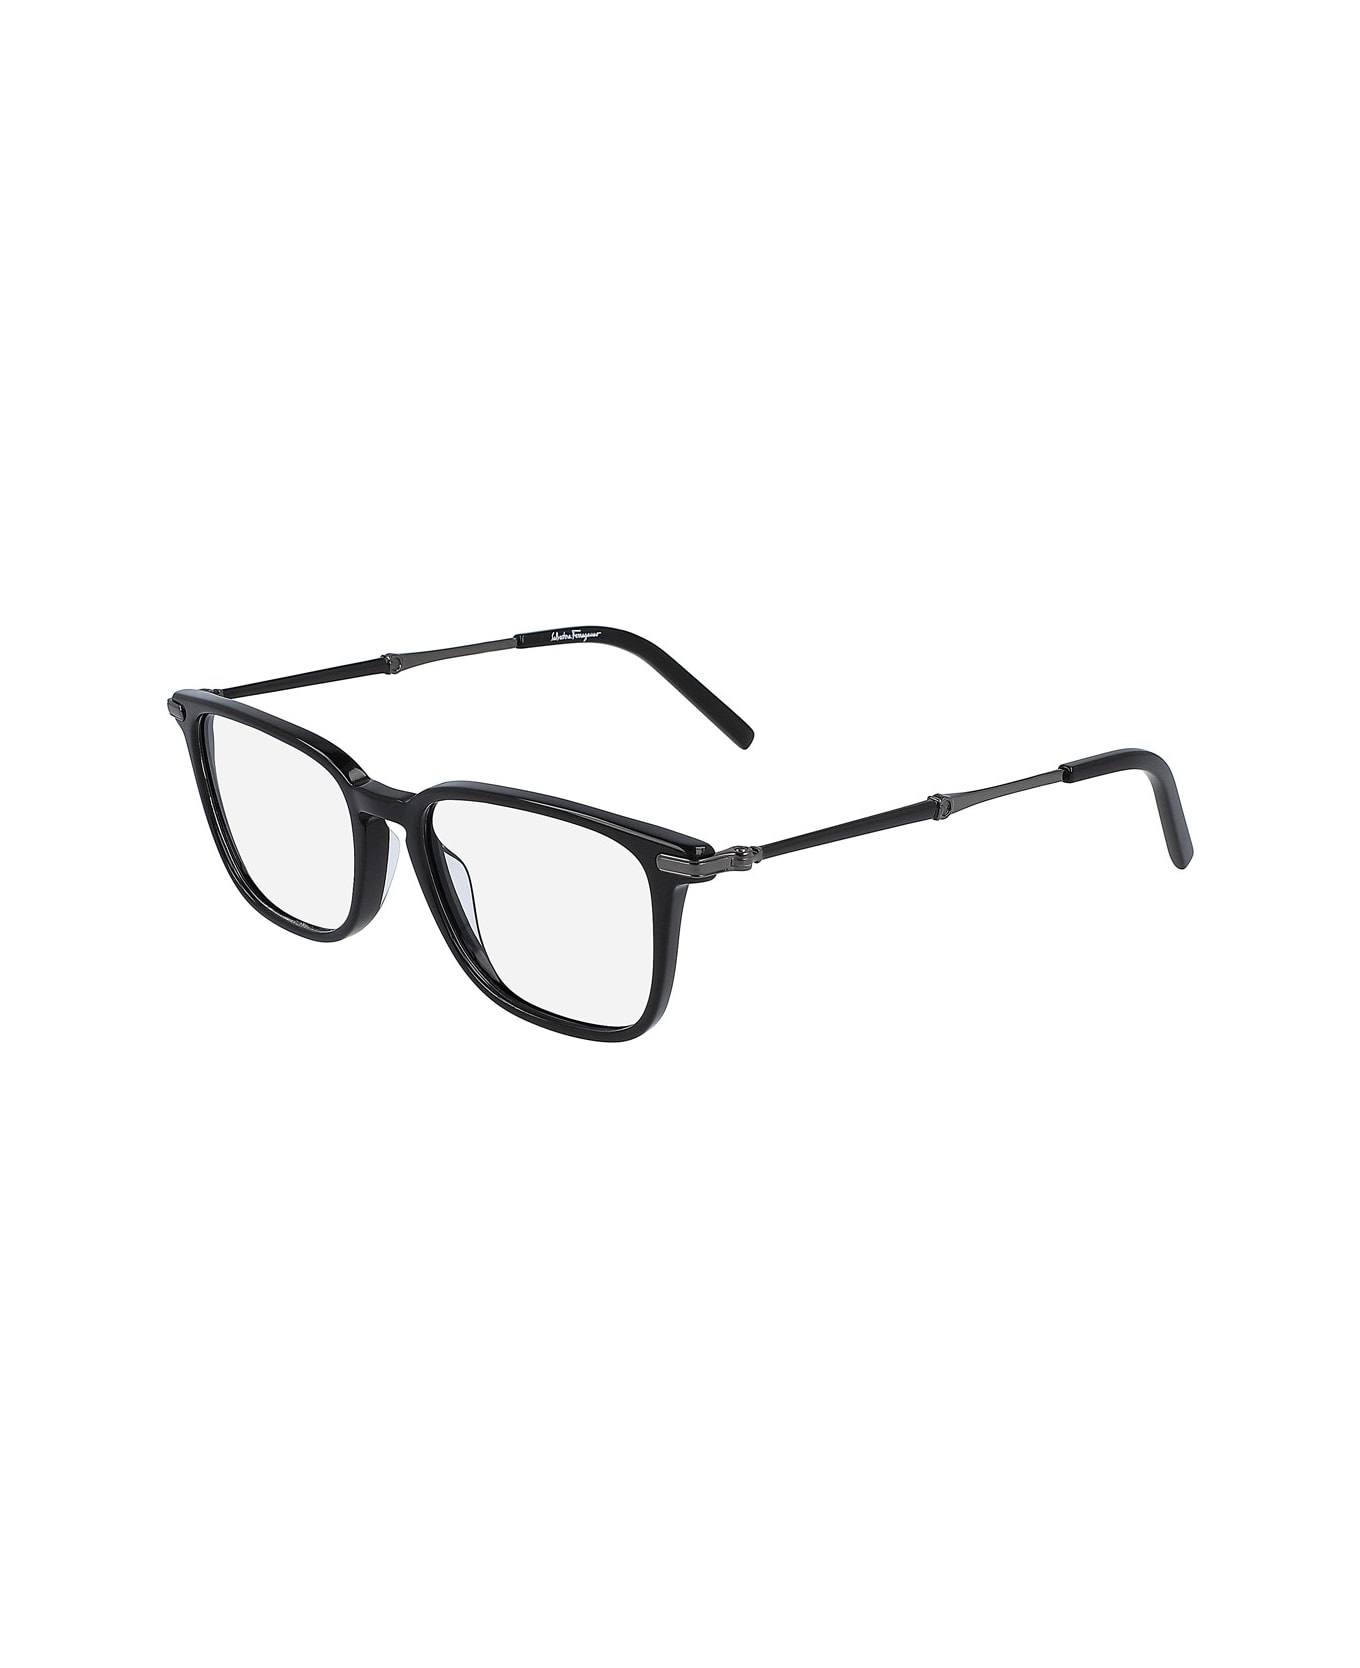 Salvatore Ferragamo Eyewear Sf2861 Glasses - Nero アイウェア